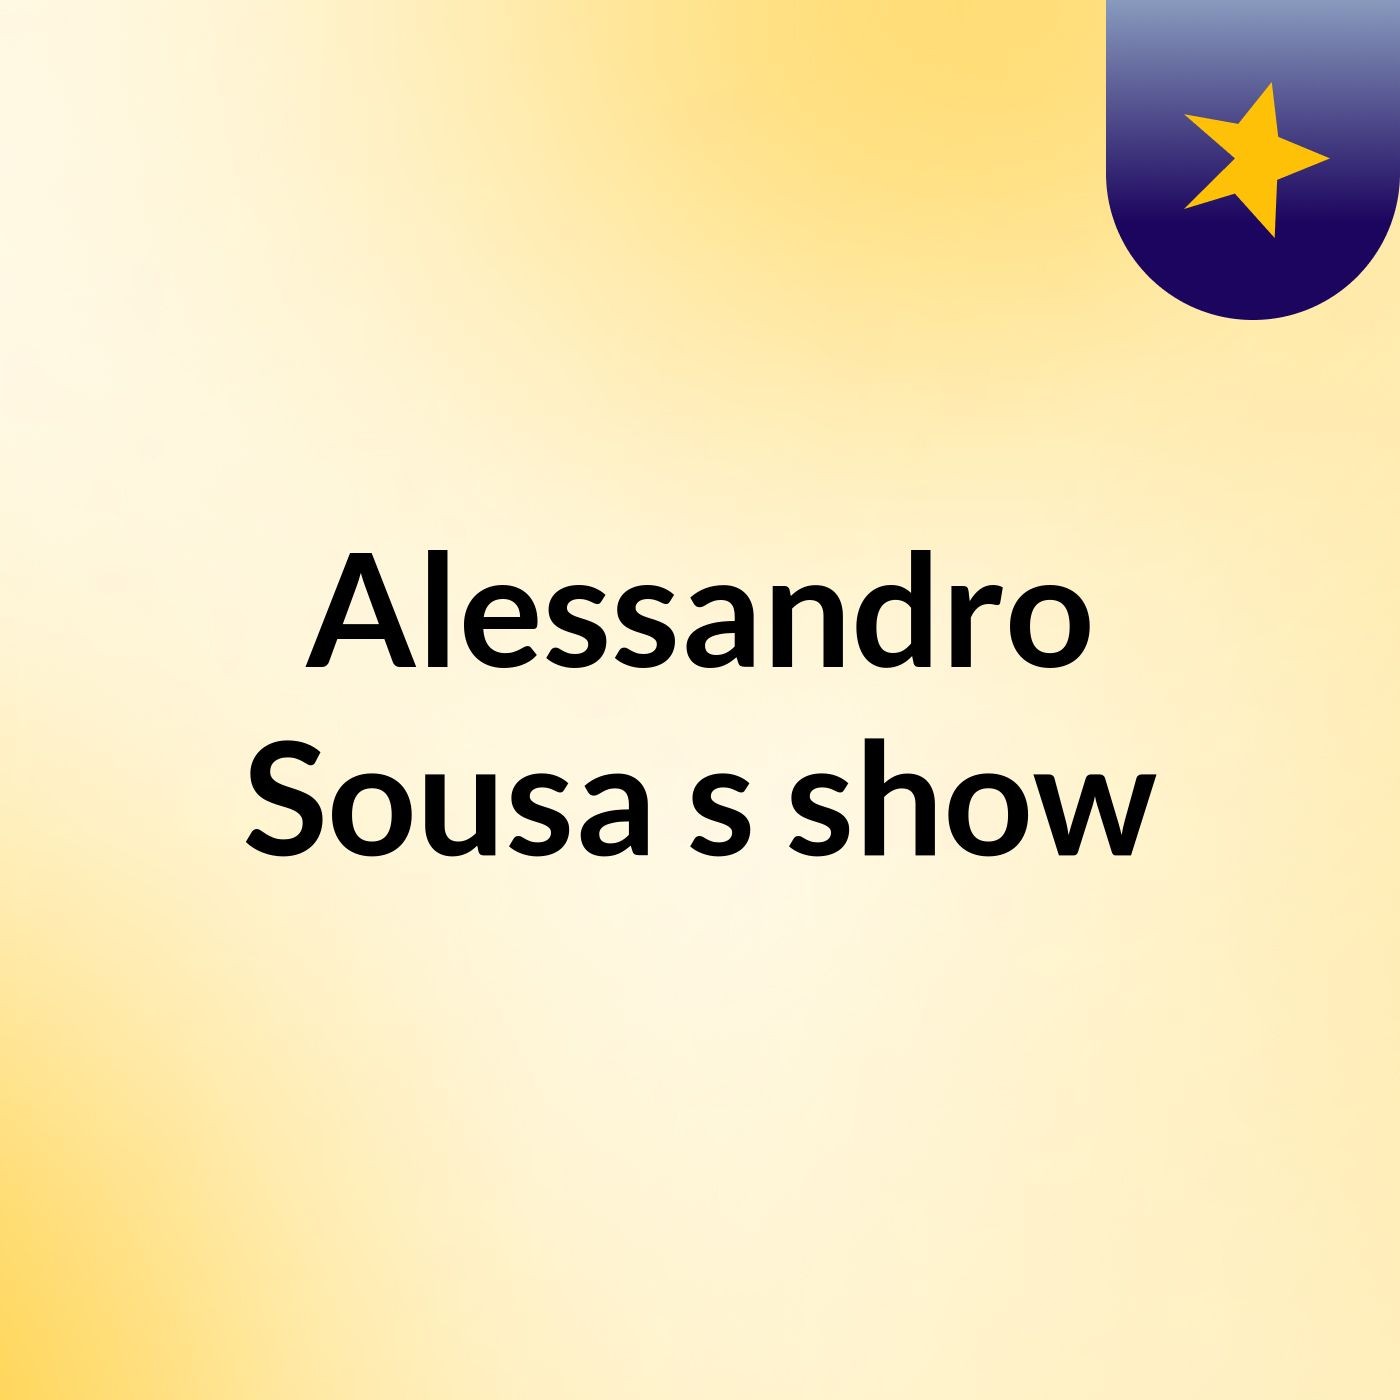 Alessandro Sousa's show